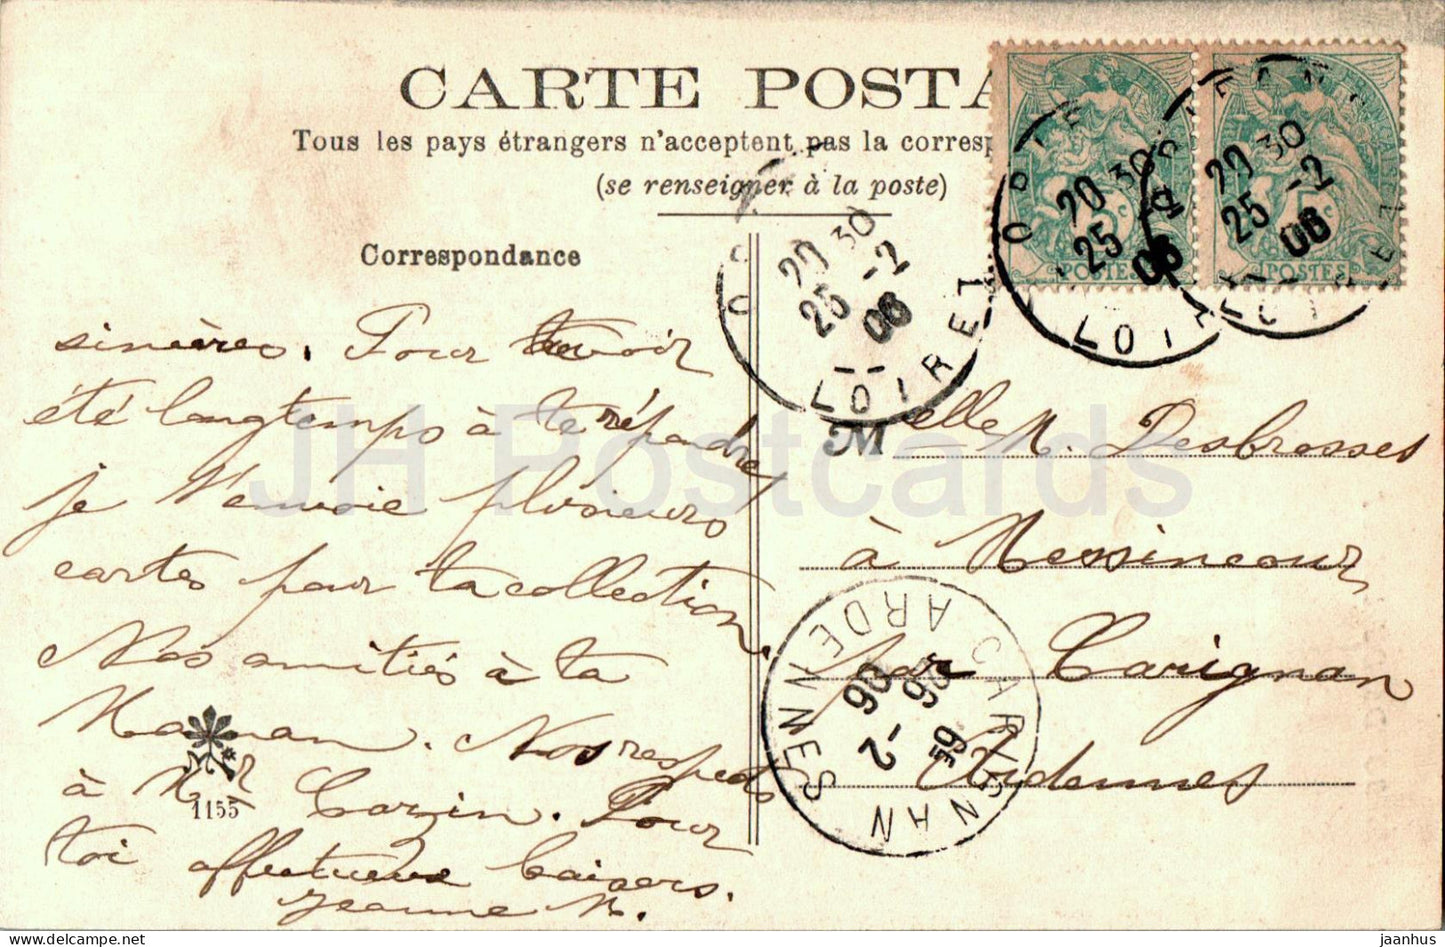 Les Bords du Loiret – 1155 – alte Postkarte – 1906 – Frankreich – gebraucht 